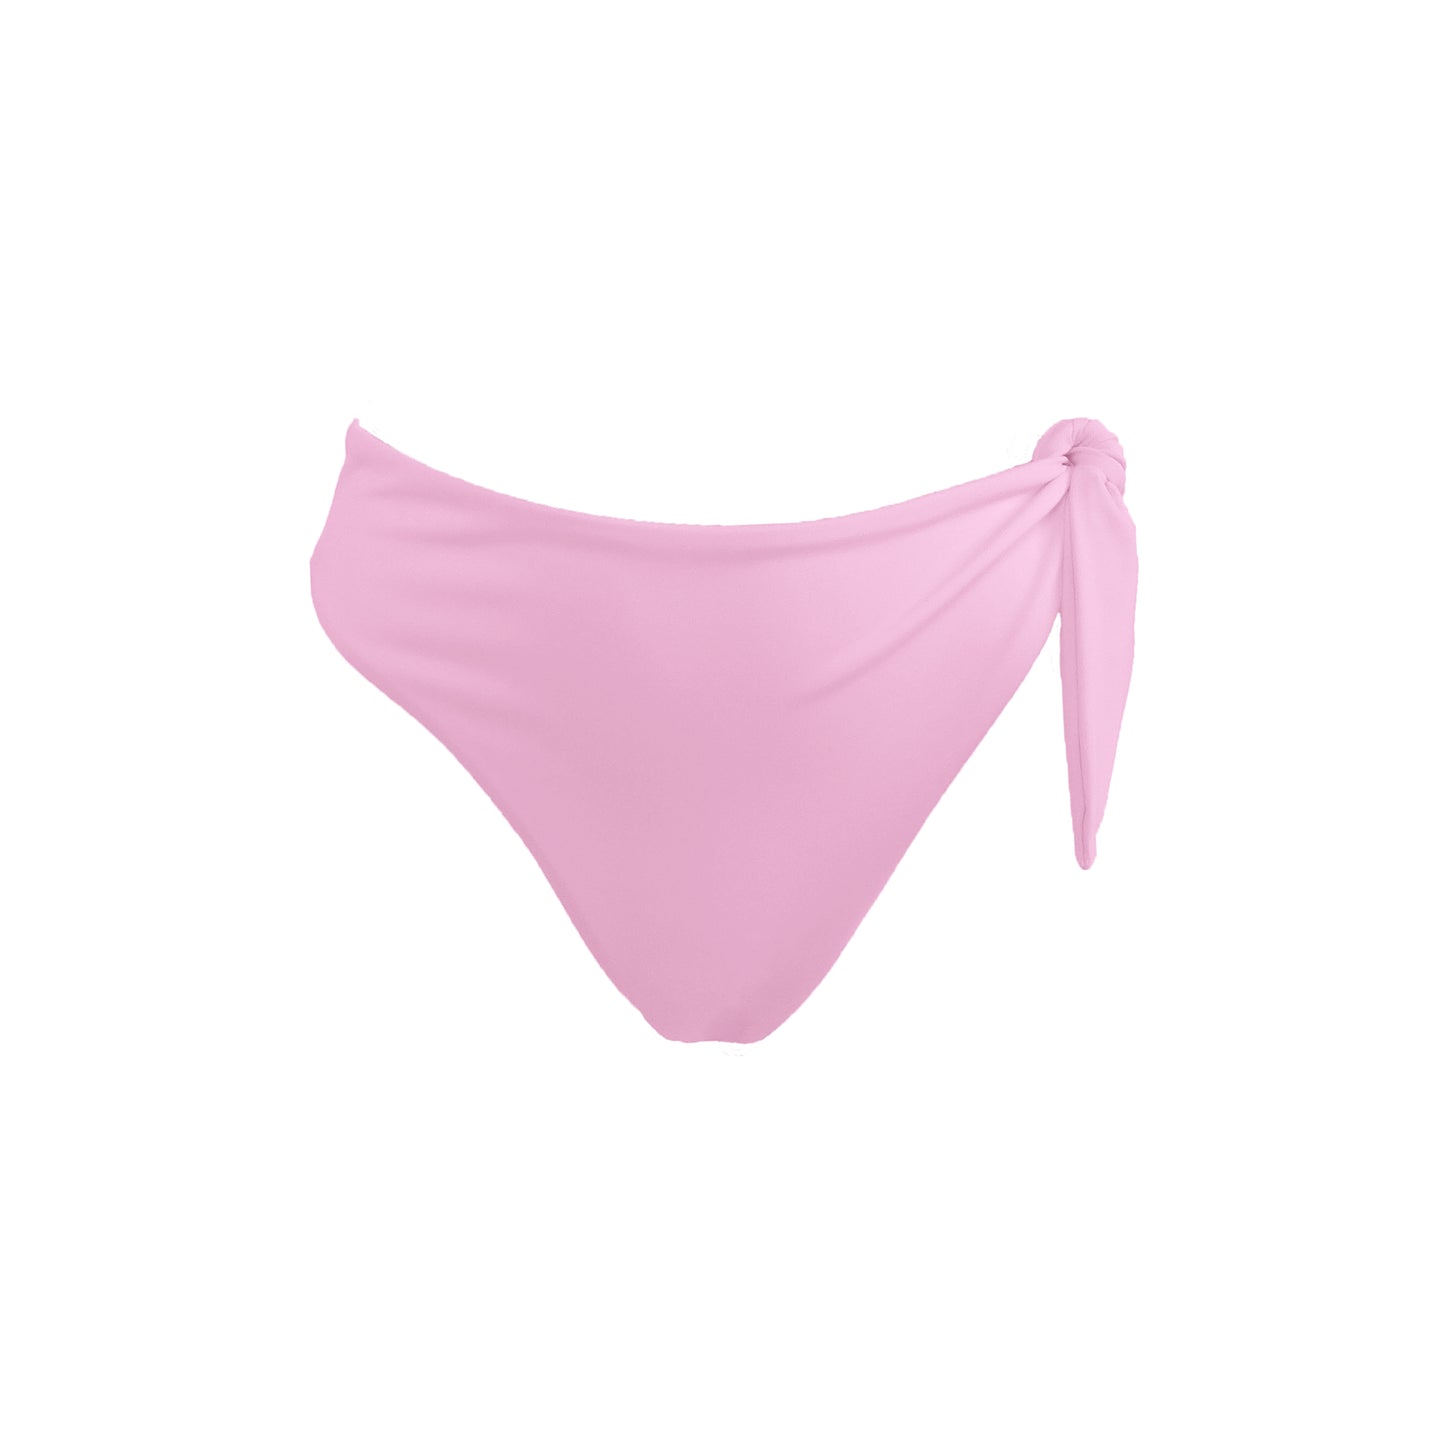 Pastel Pink Capri bikini bottom with asymmetric adjustable side tie and cheeky bum coverage.